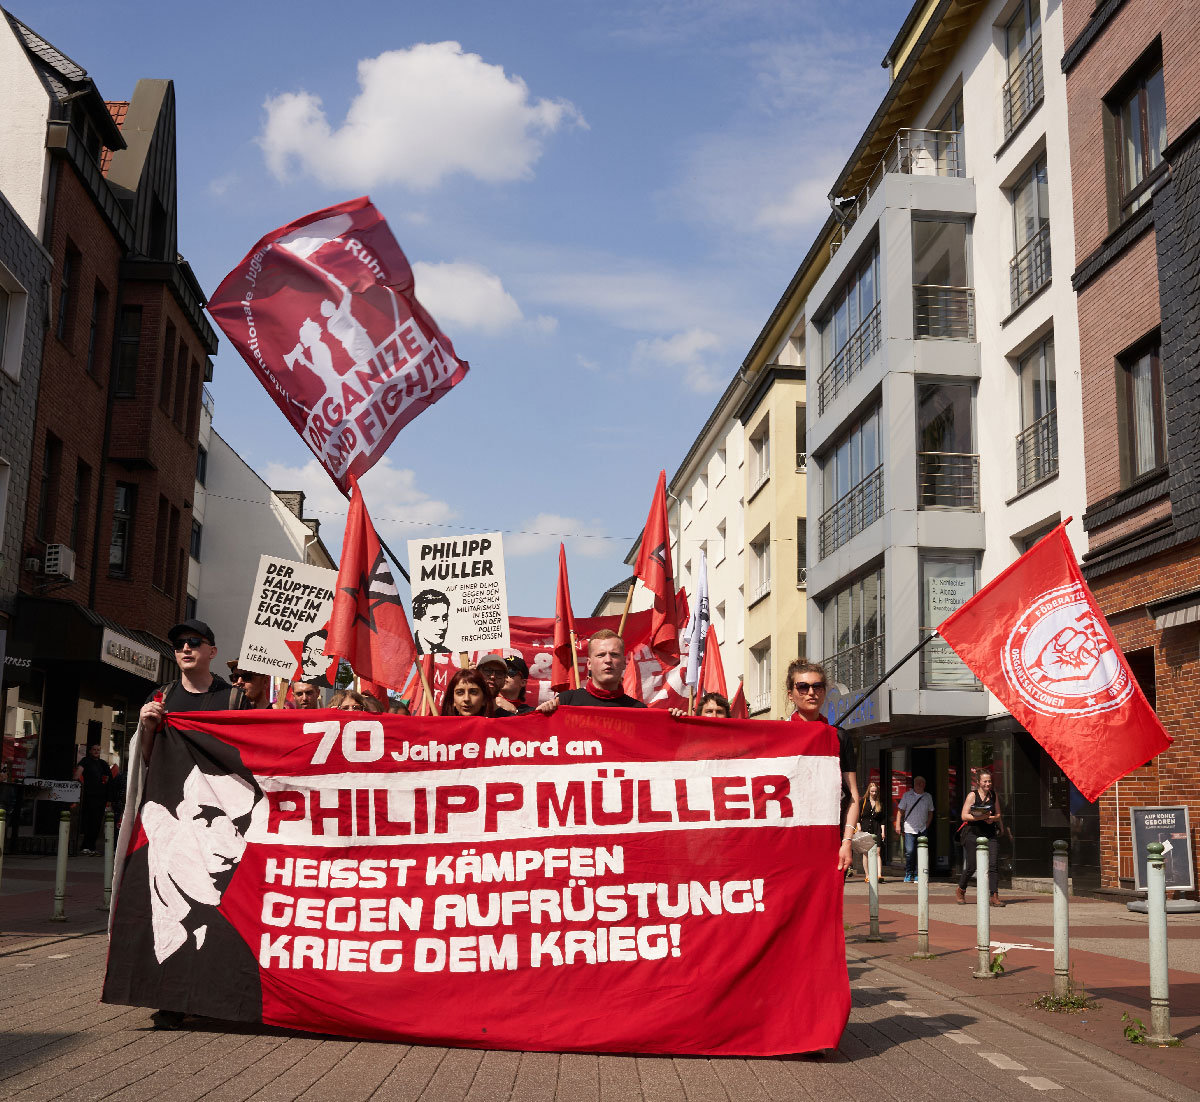 2005 Mueller3 1 - 70 Jahre Mord an Philipp Müller - DKP, Essen, Philipp Müller, SDAJ - Politik